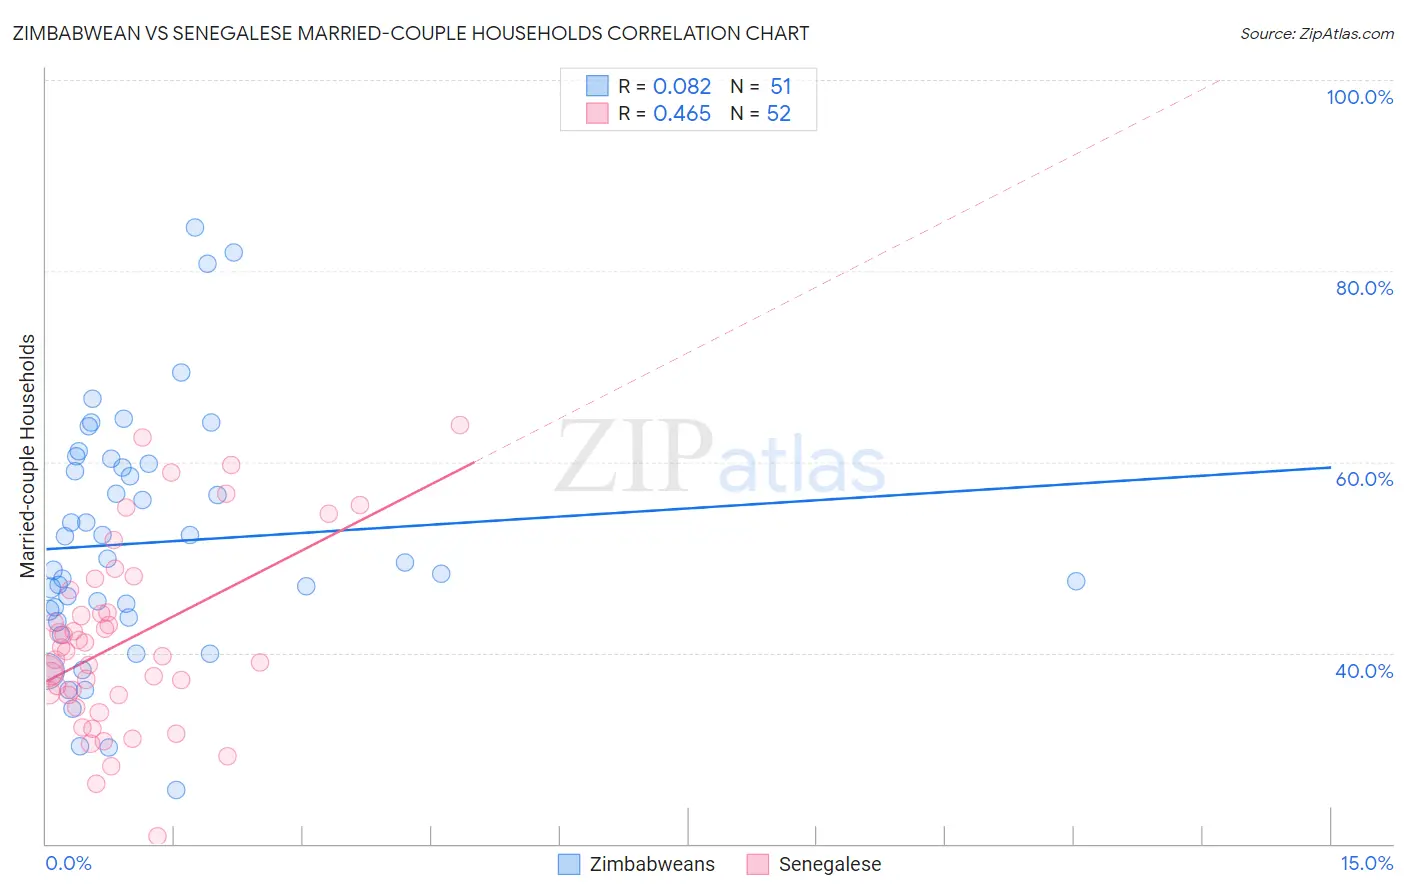 Zimbabwean vs Senegalese Married-couple Households